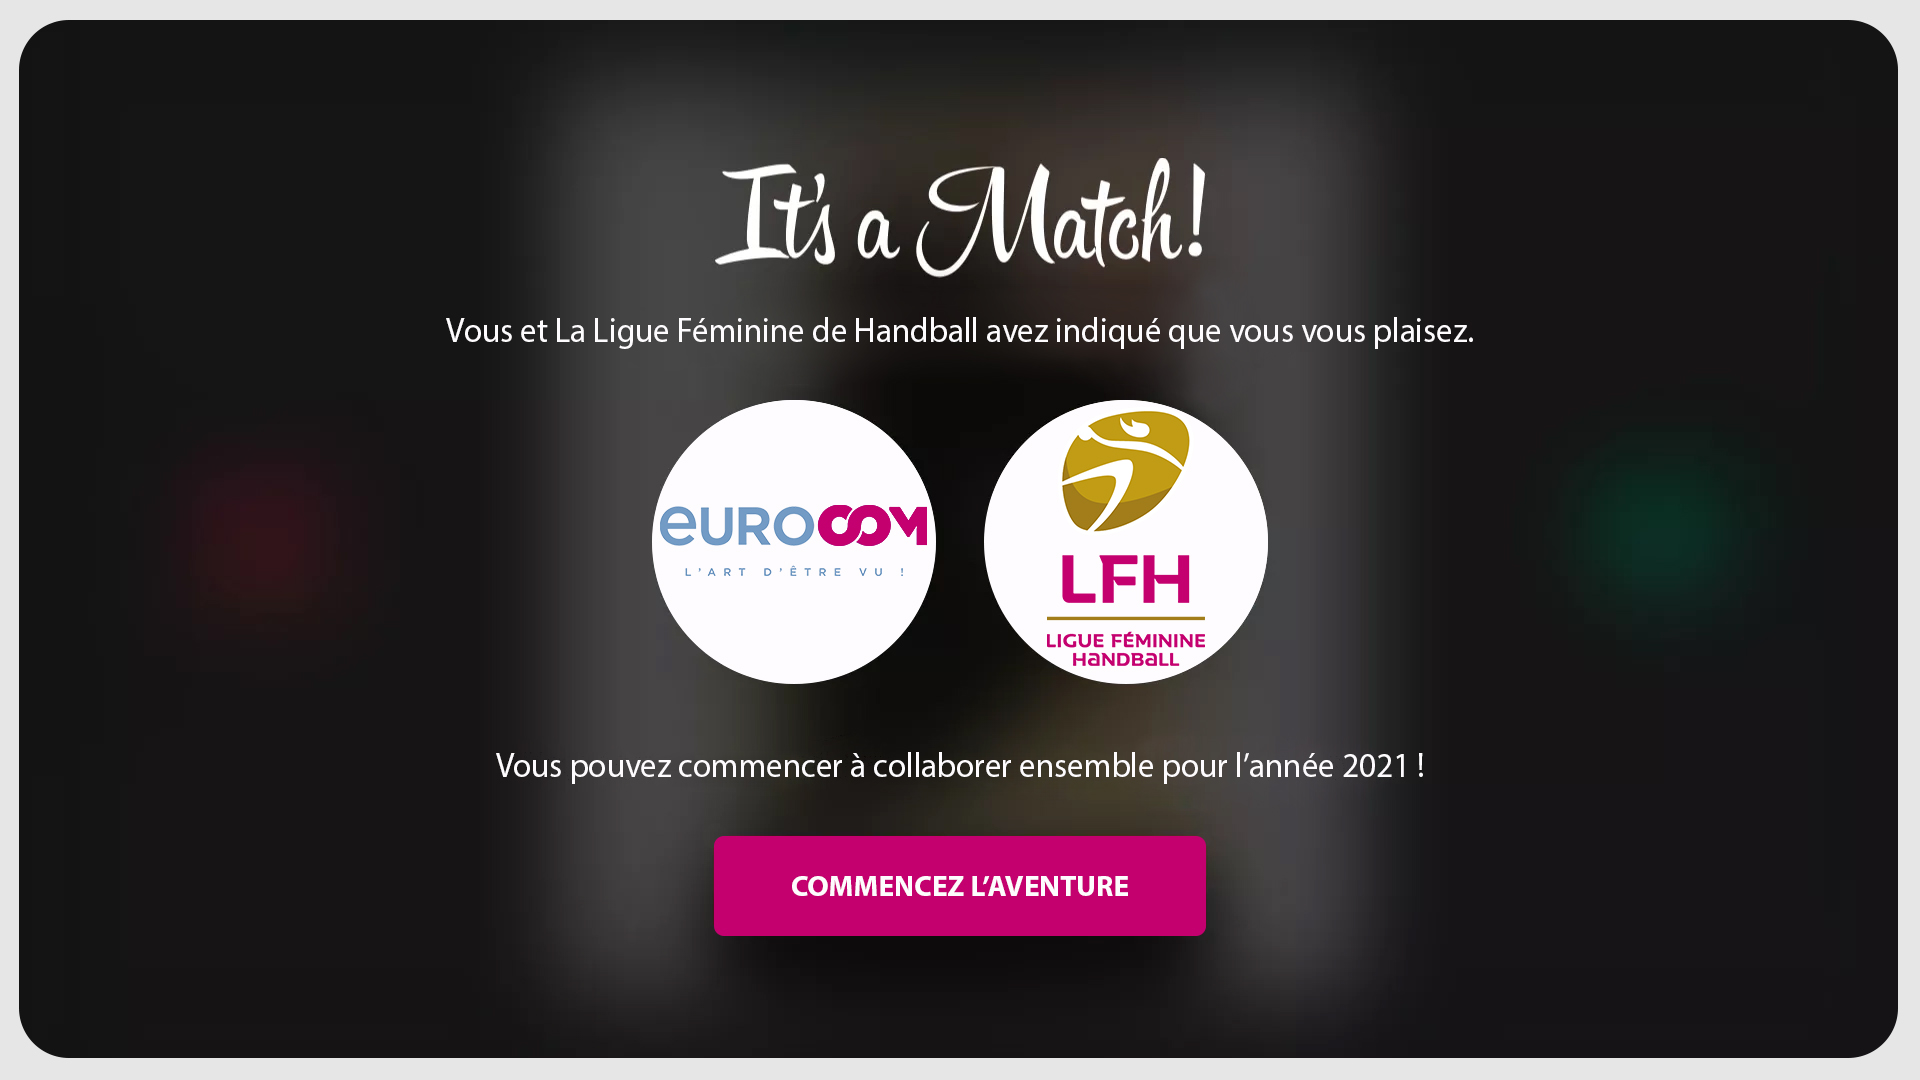 Eurocom x LFH match